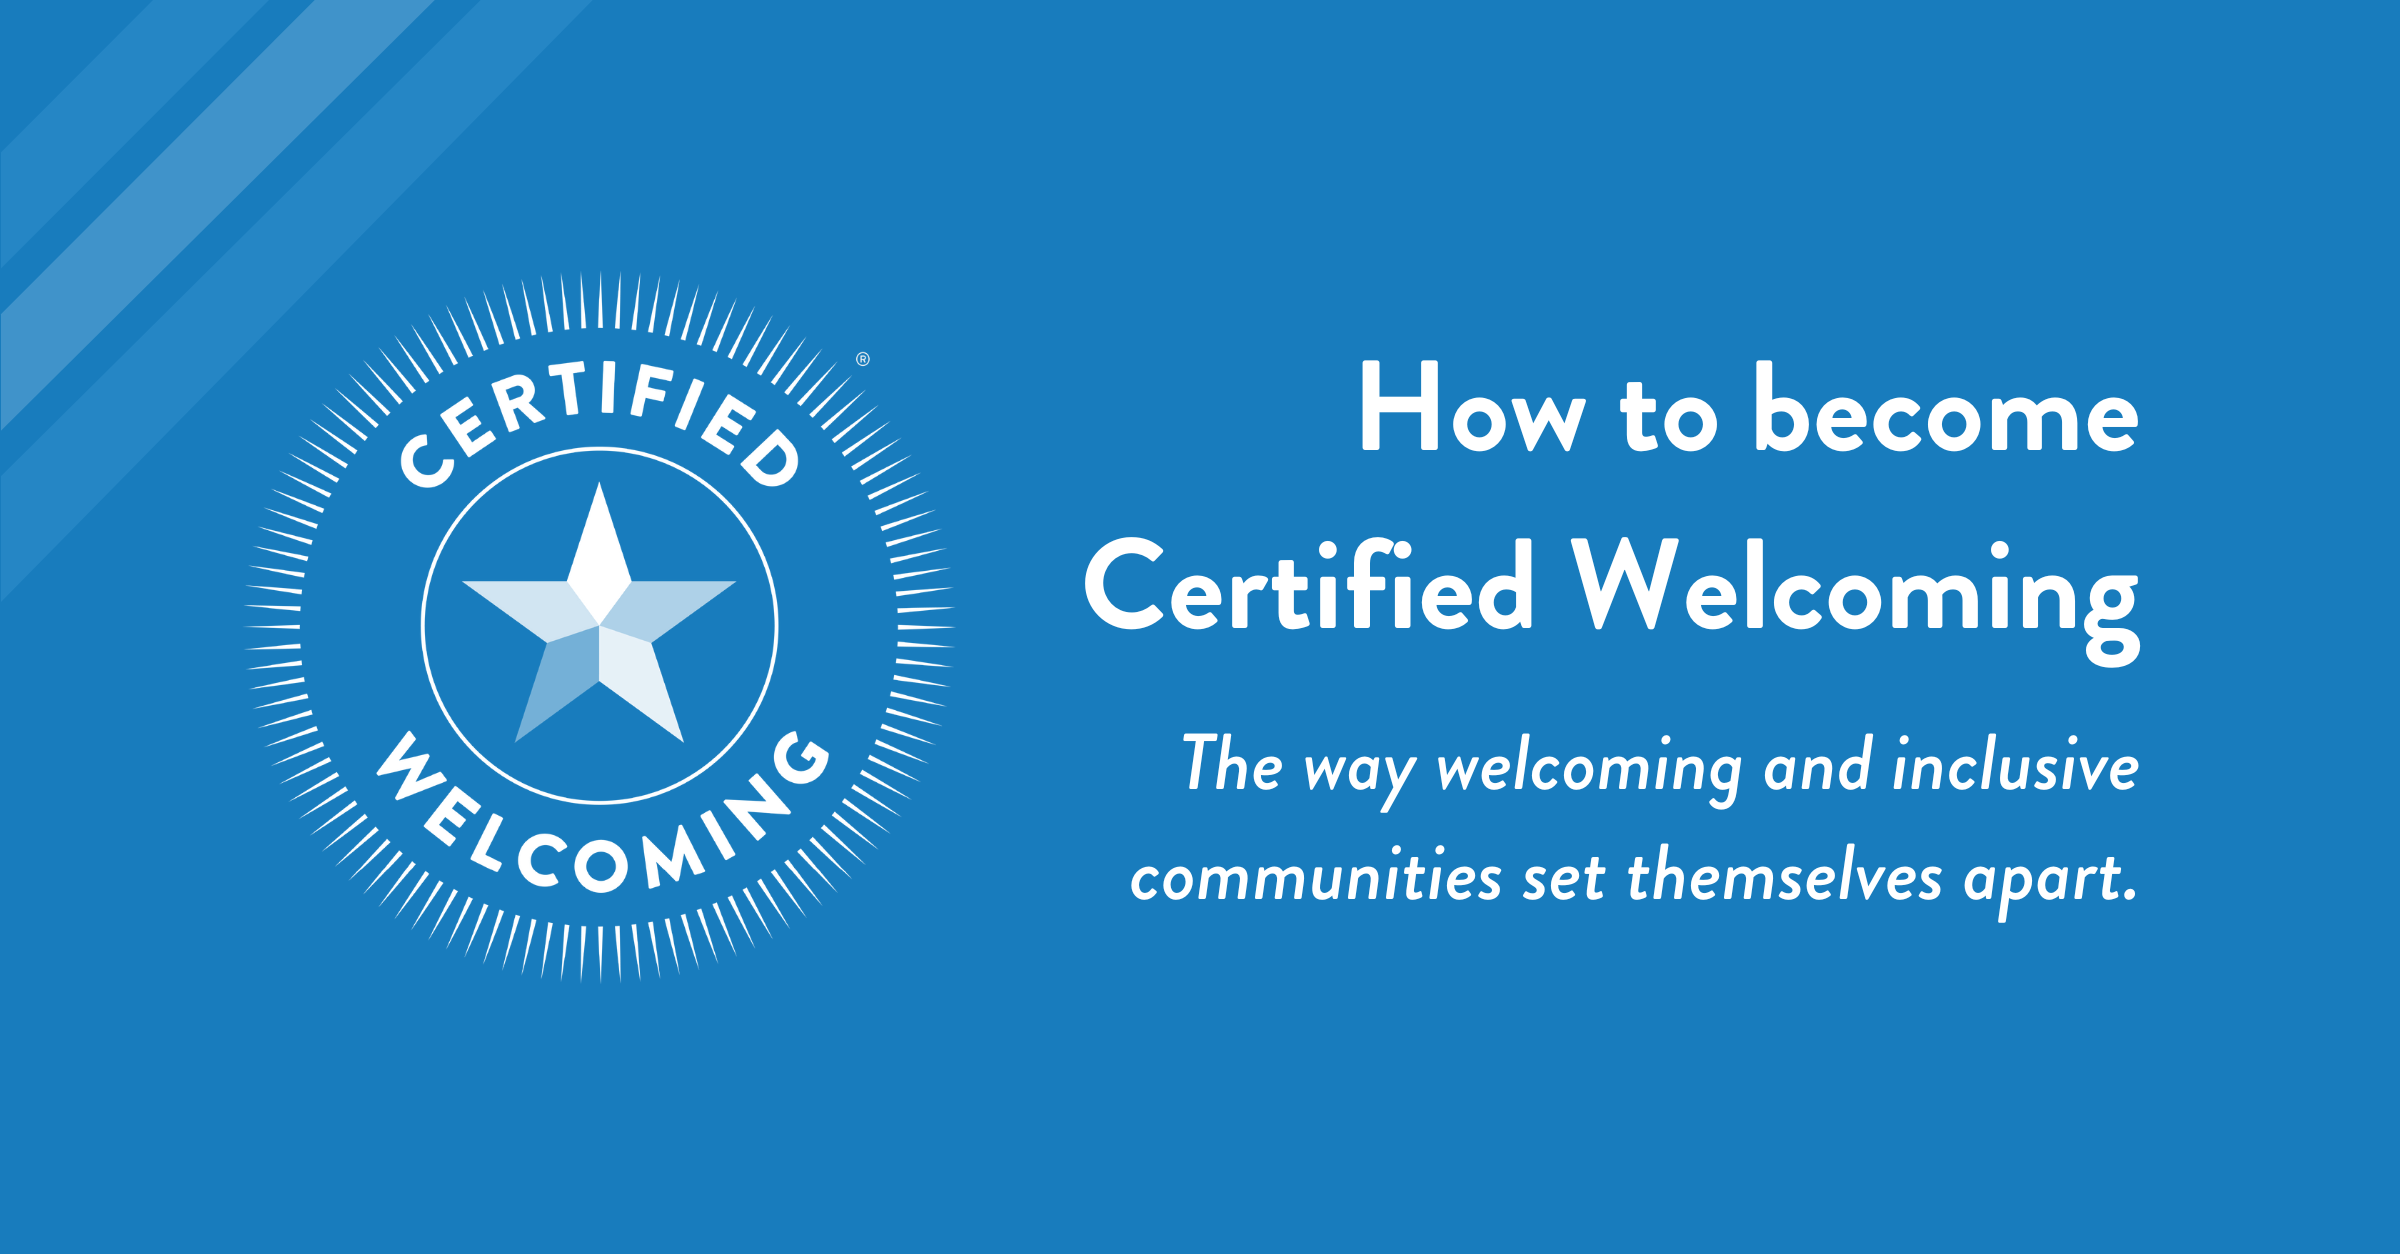 Certified Welcoming - programmatic seal